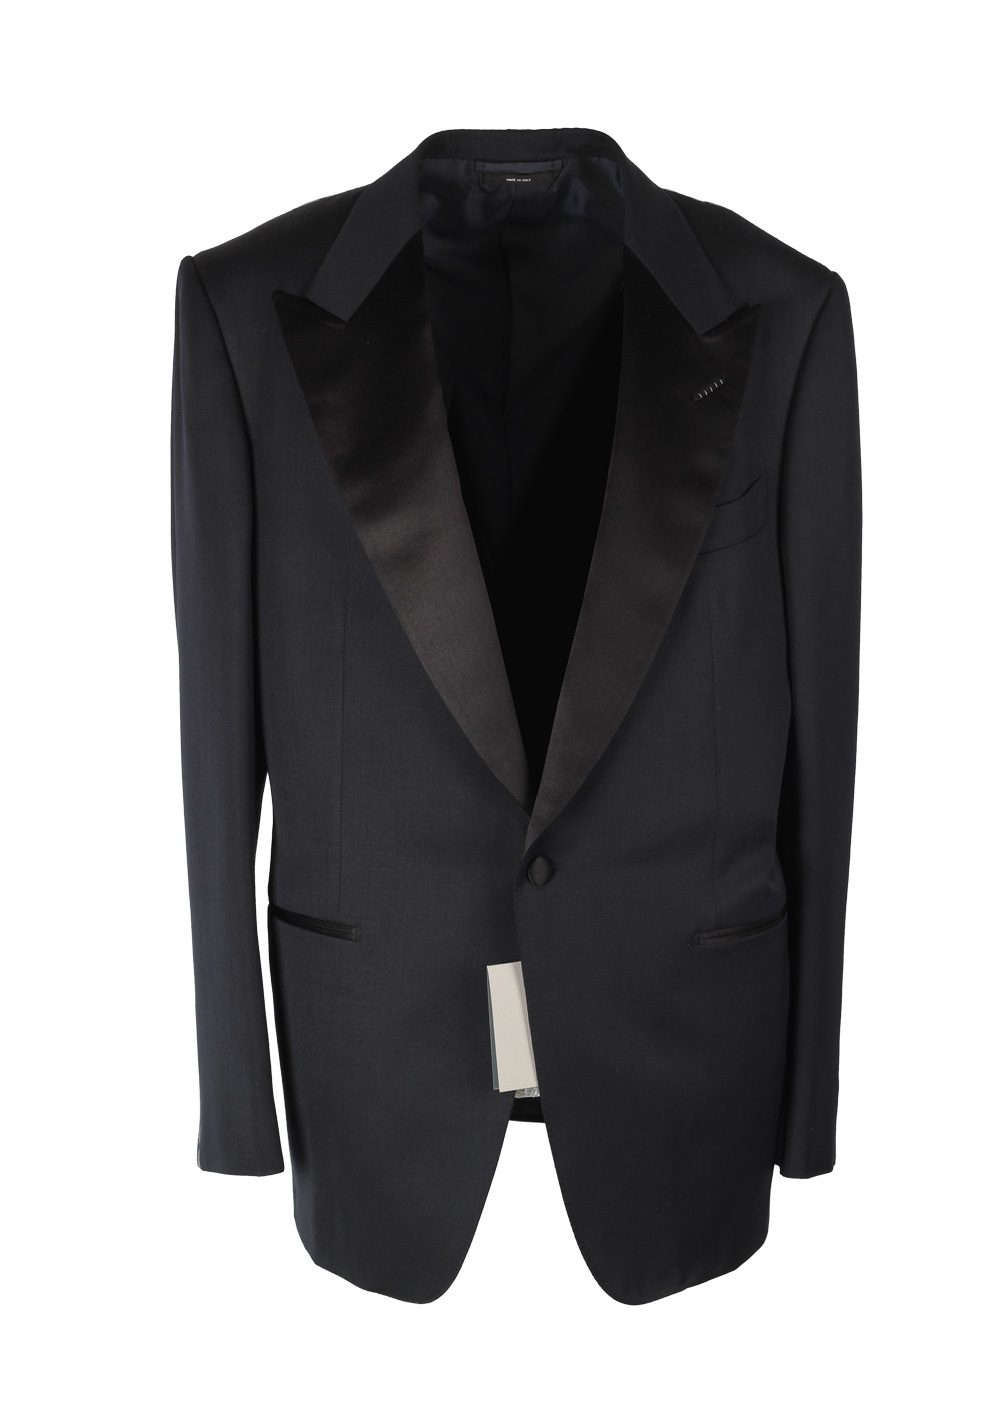 TOM FORD Windsor Midnight Blue Tuxedo Smoking Suit Size 54 / 44R U.S ...